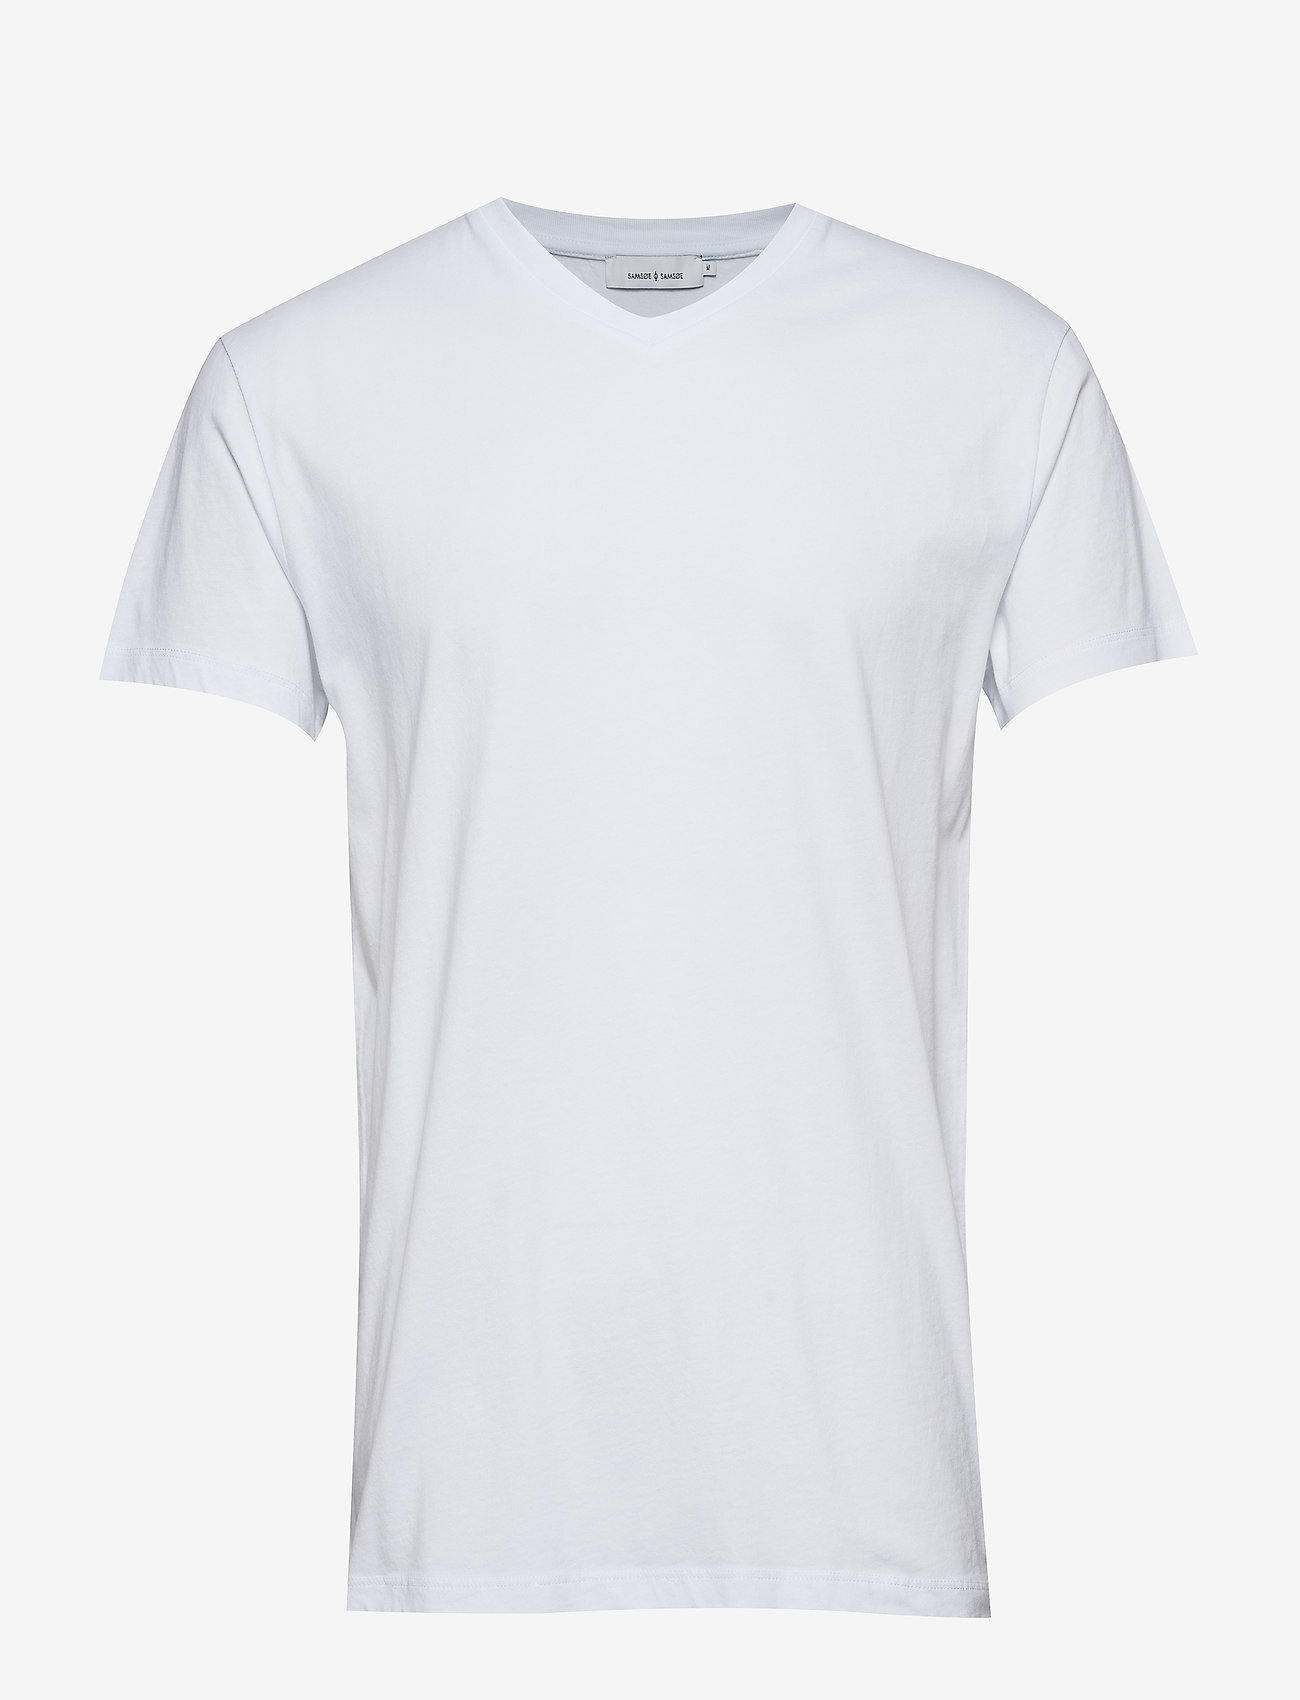 Samsøe Samsøe - Kronos v-n t-shirt 273 - podstawowe koszulki - white - 0